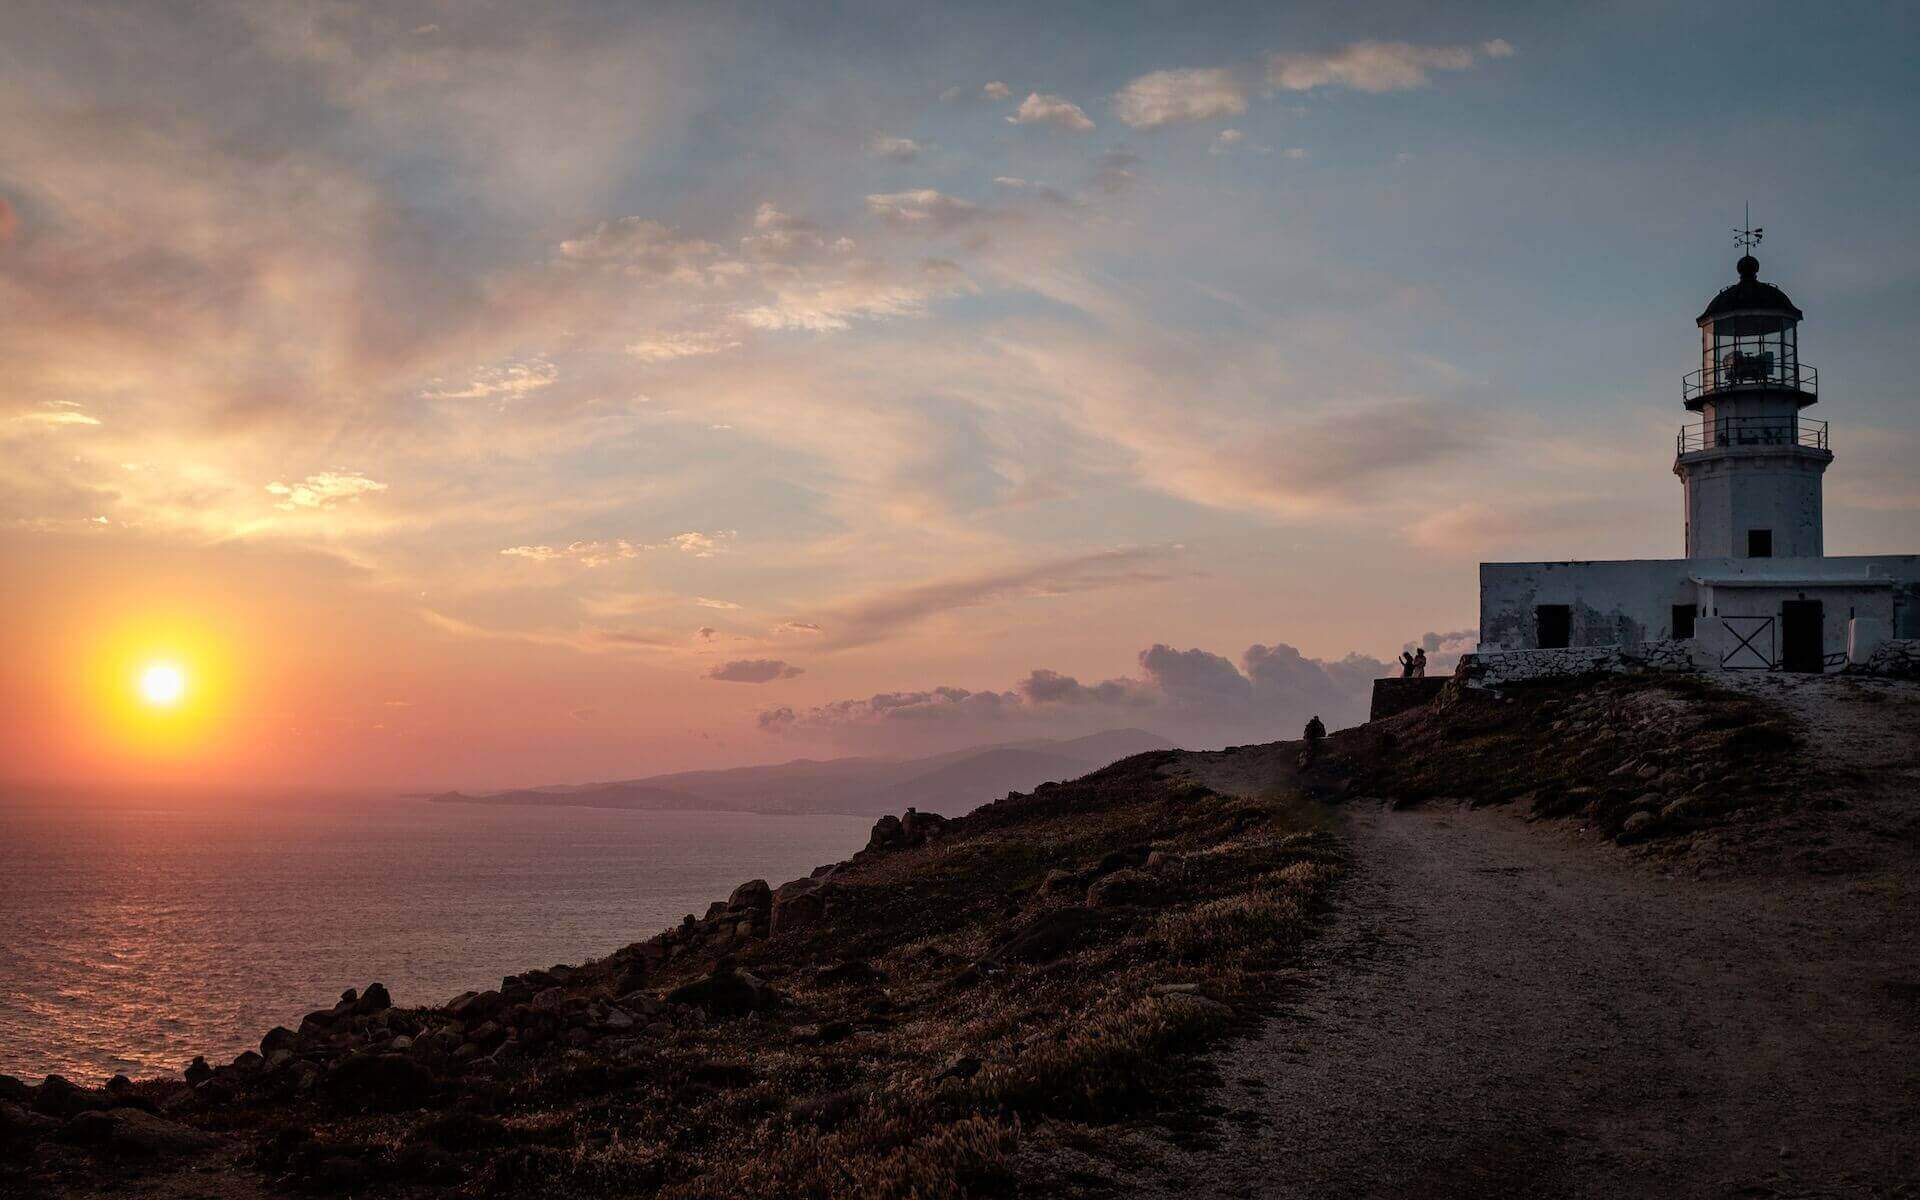 Armenistis Lighthouse in Mykonos at sunset